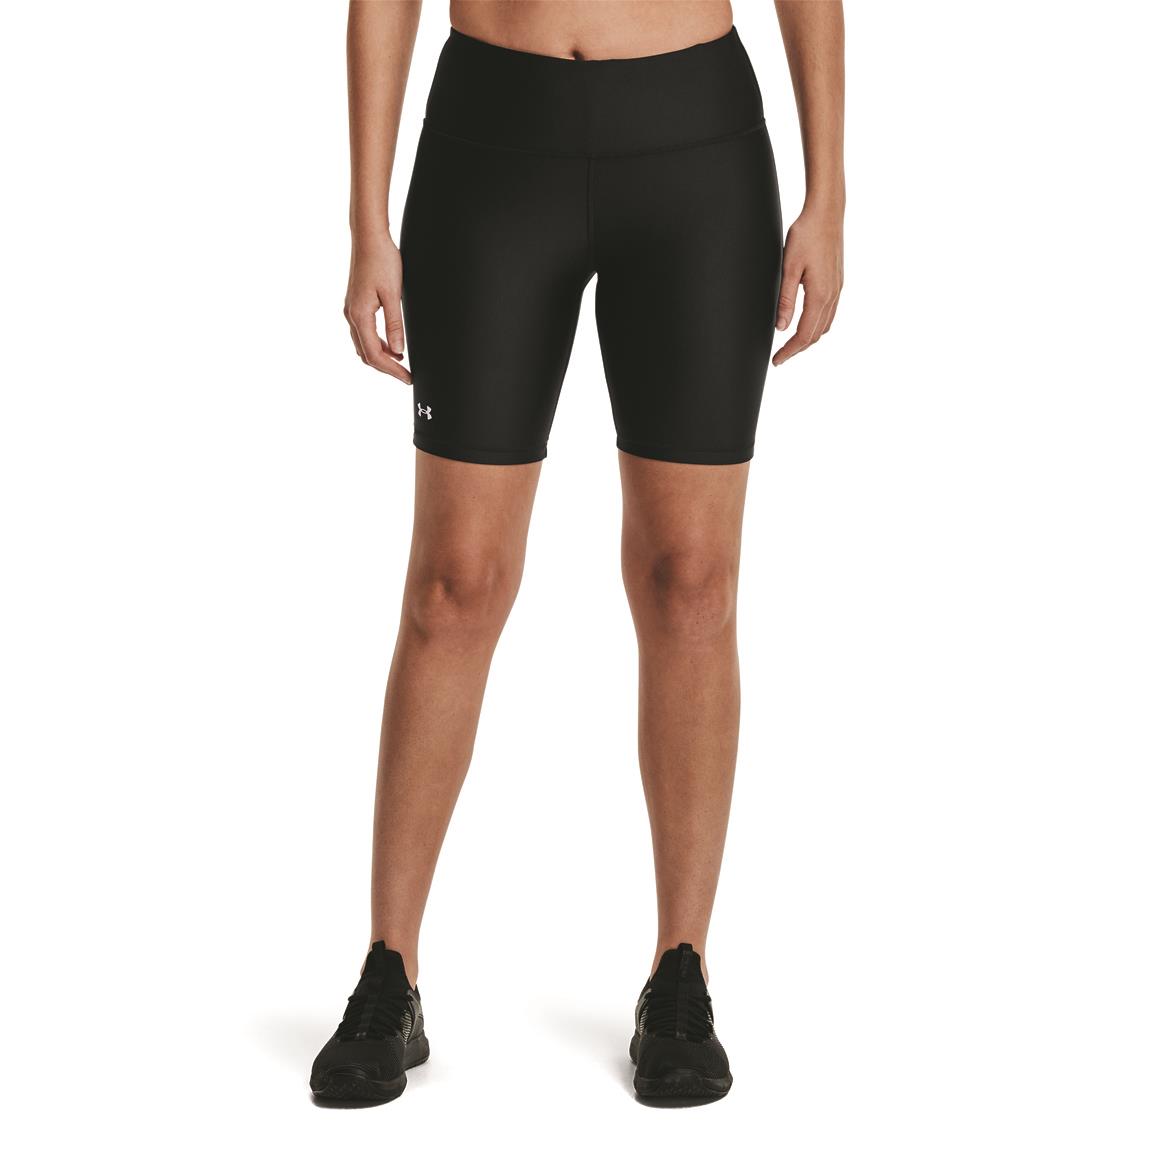 Under Armour Women's HeatGear Armour Bike Shorts, Black/White